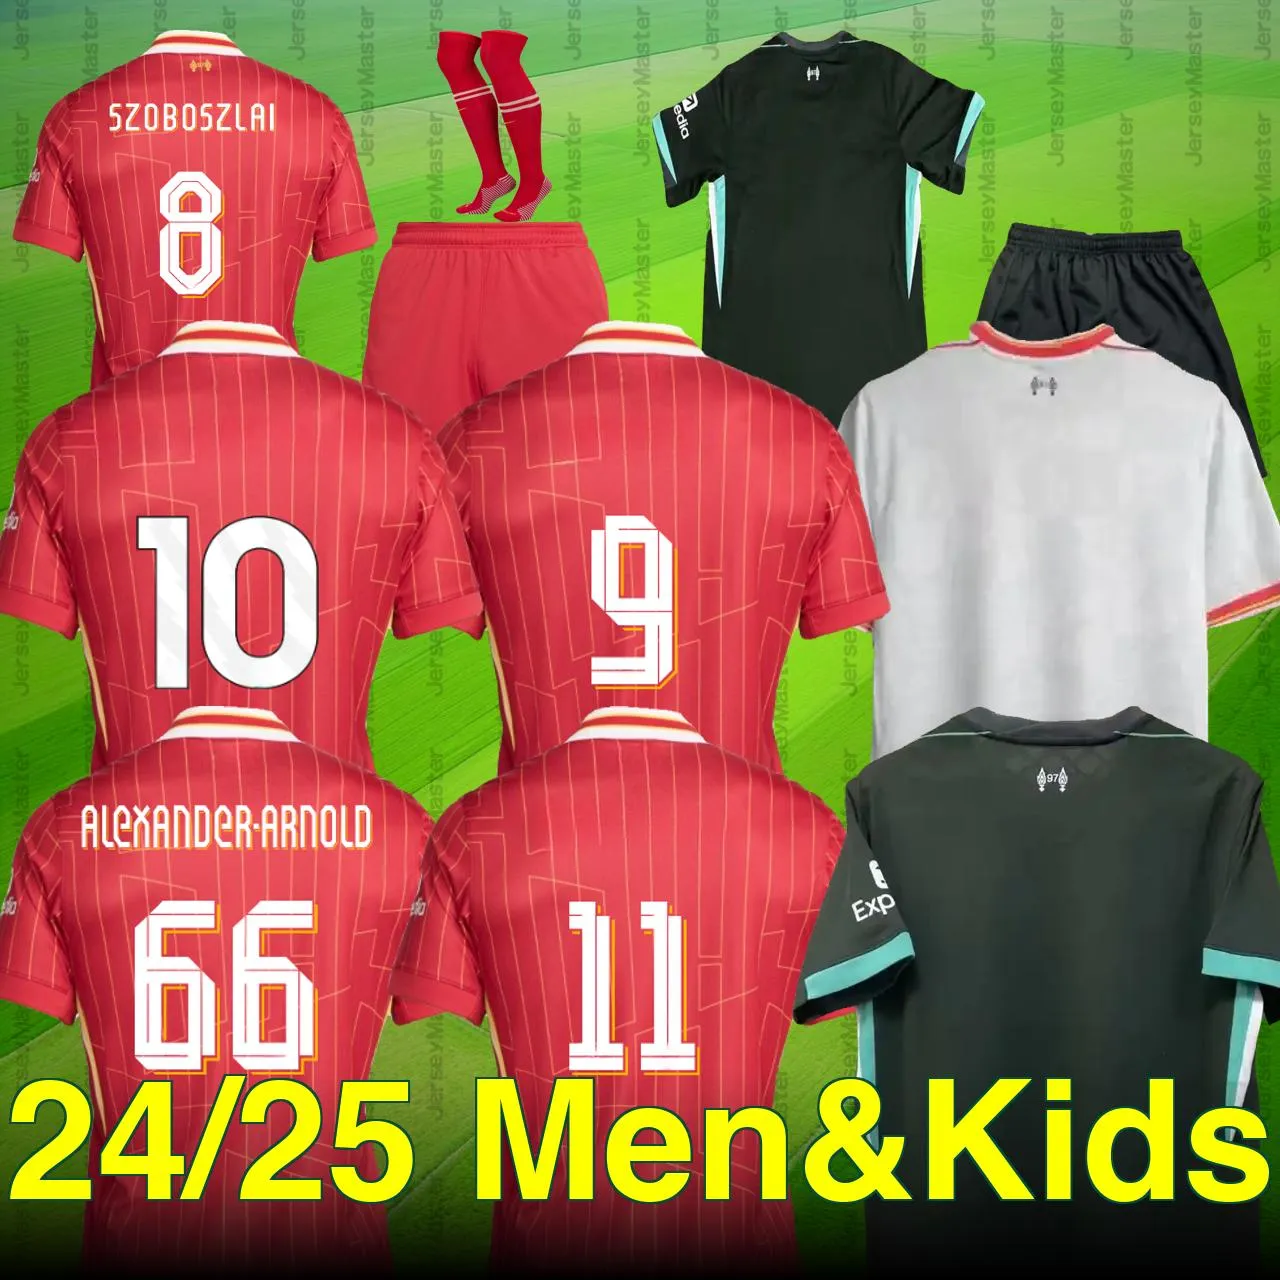 24 25 The Reds Soccer Jerseys - Top Quality pour les fans / joueur - Home, Away, Third Kits